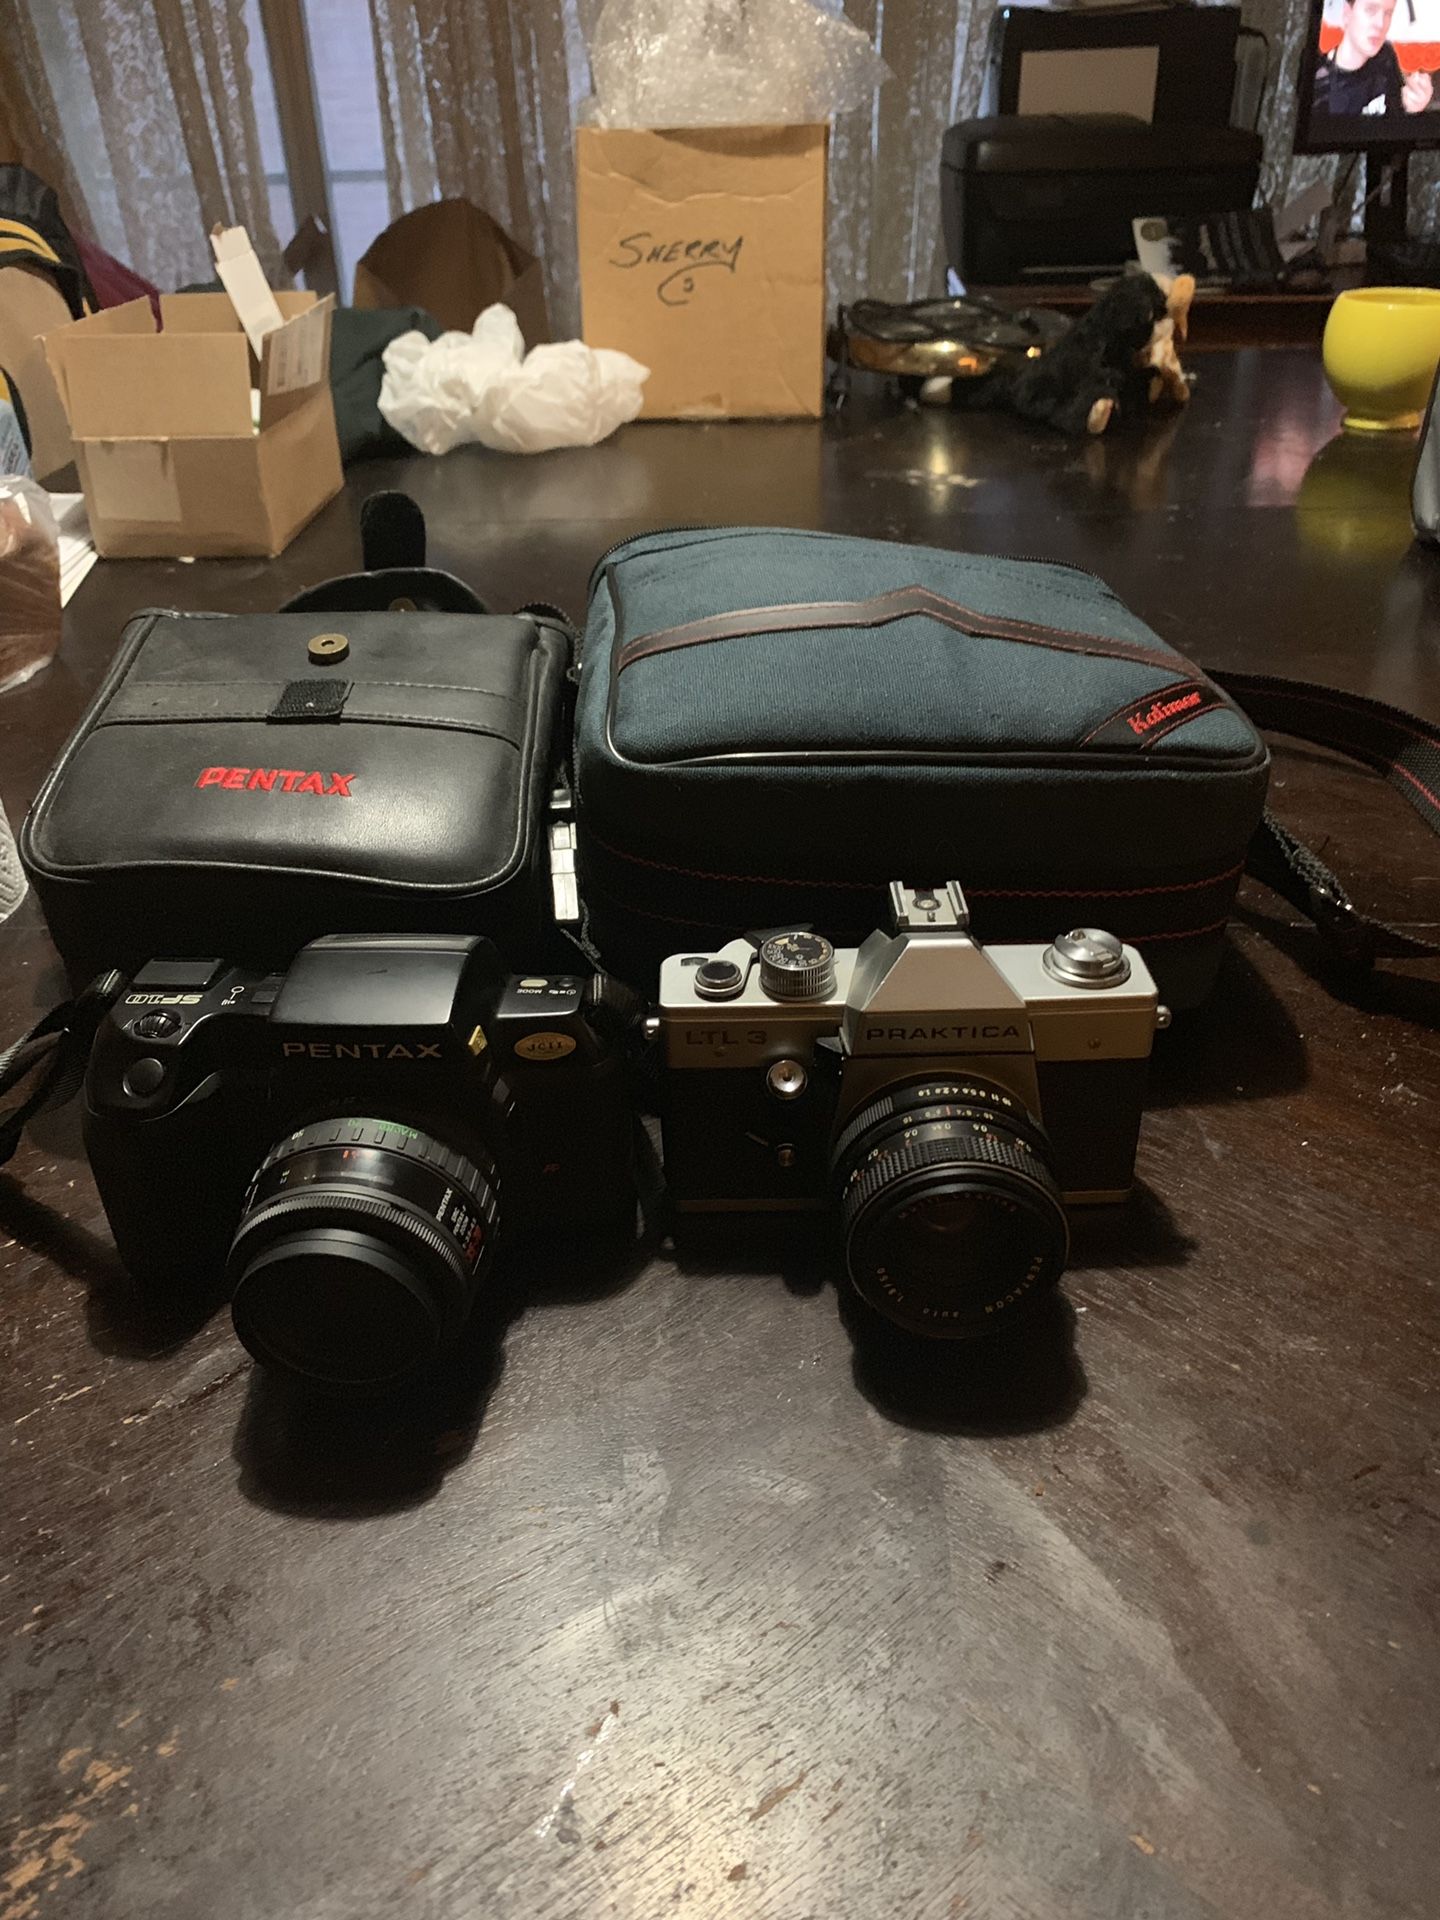 7 film cameras includes 3 cases Pentax canon Praktika